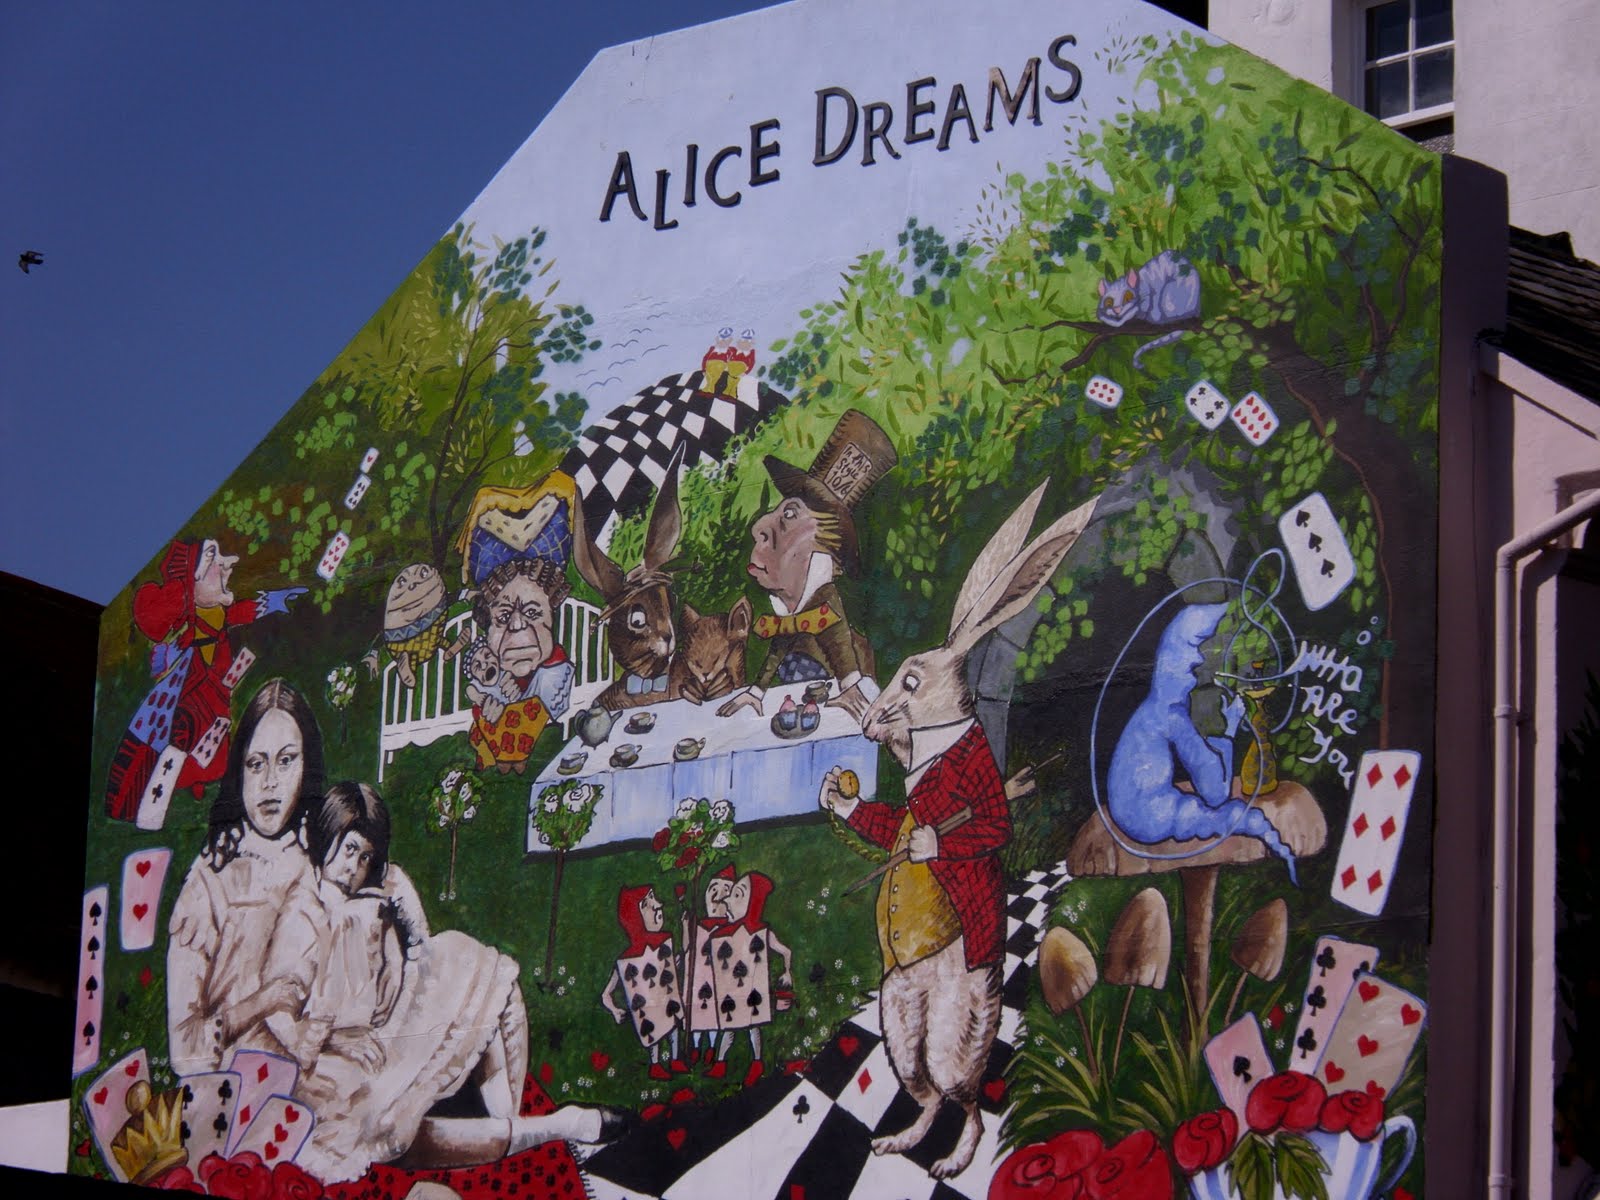 HD Wallpaper Alice In Wonderland Mural